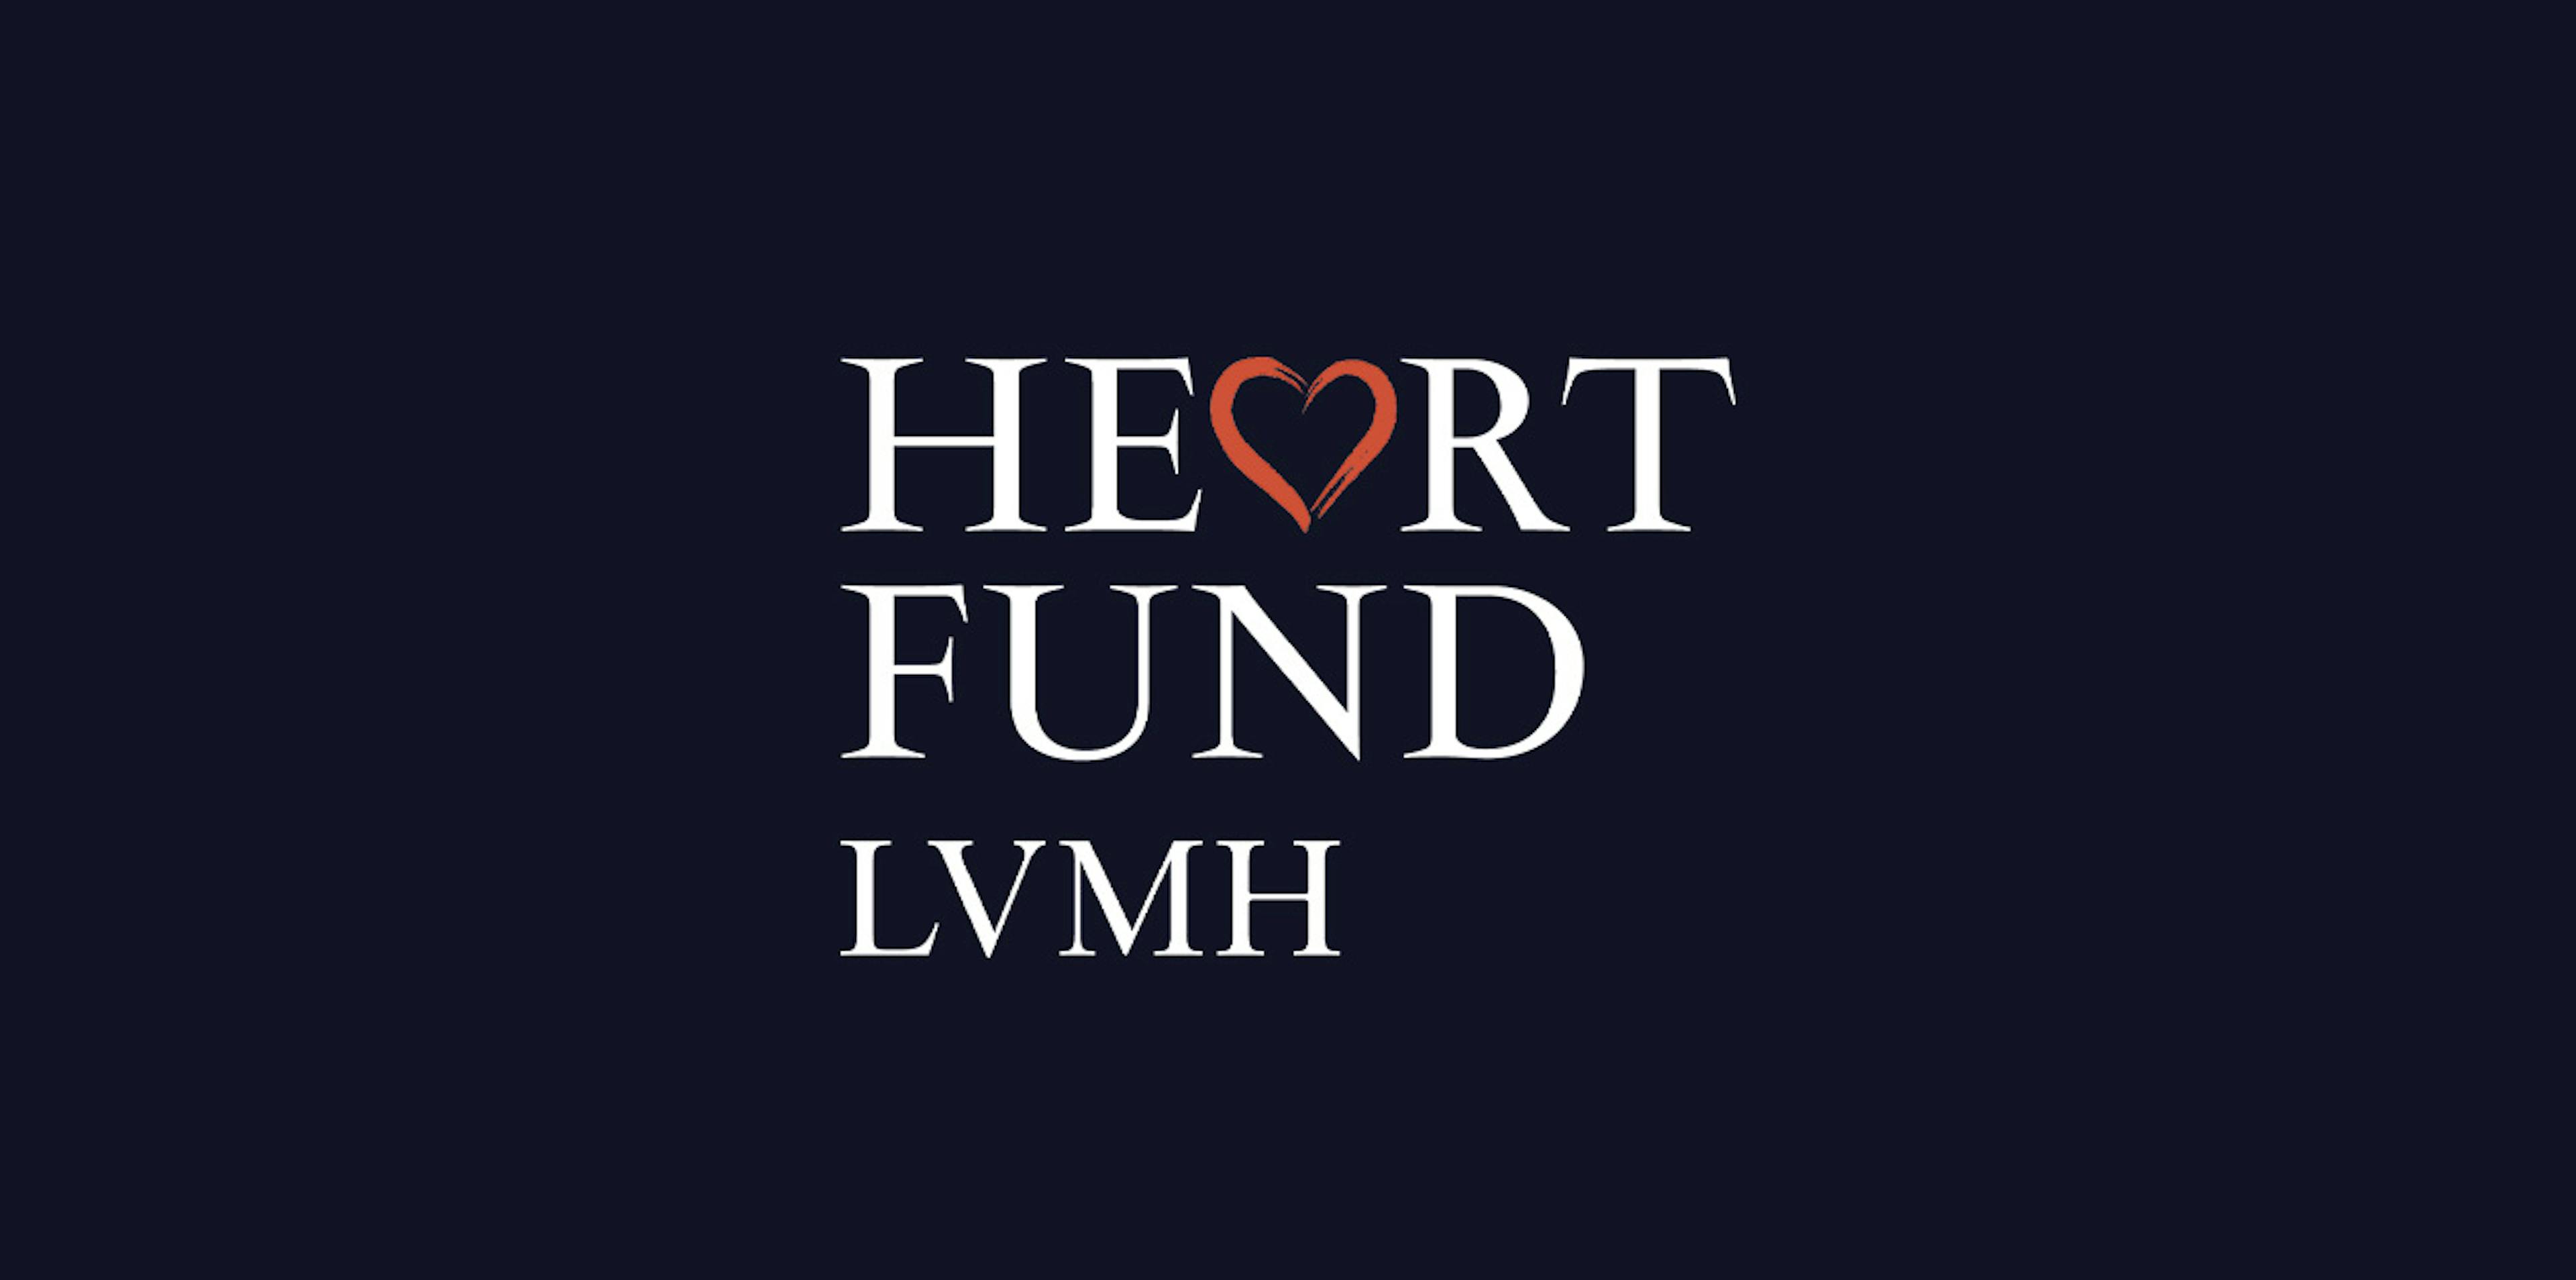 LVMH Heart Fund logo